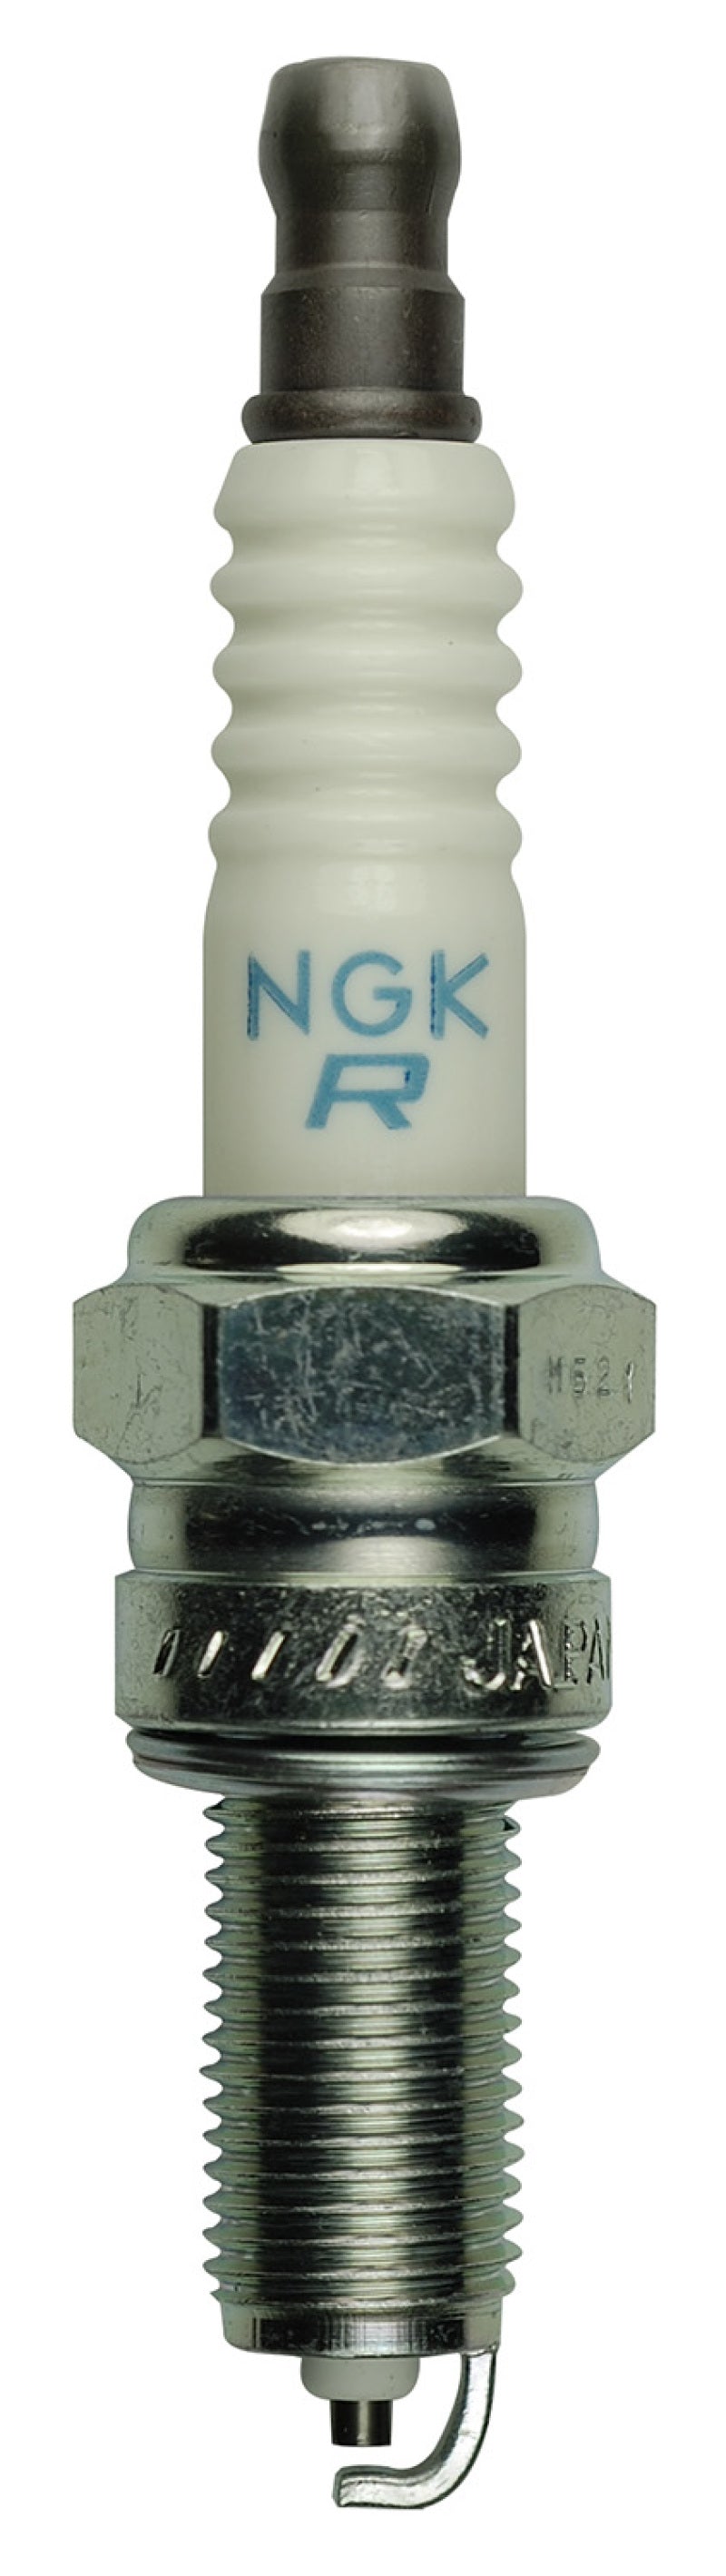 NGK Standard Spark Plug Box of 10 (MR8F) -  Shop now at Performance Car Parts